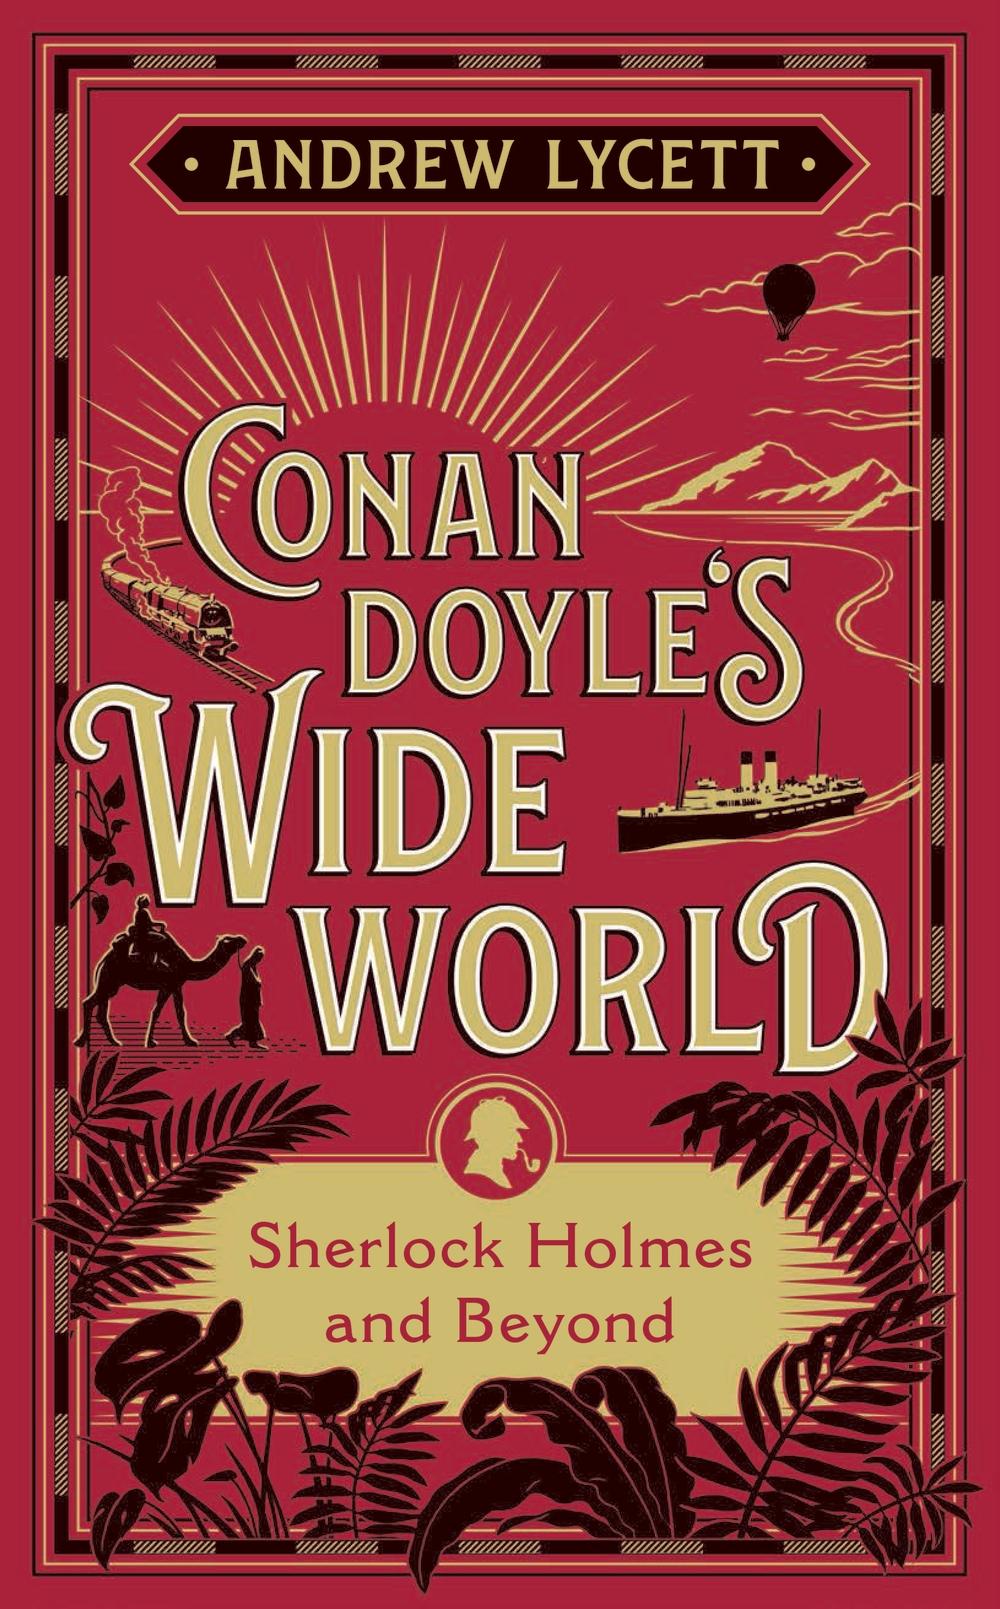 Conan Doyle's Wide World - Andrew Lycett